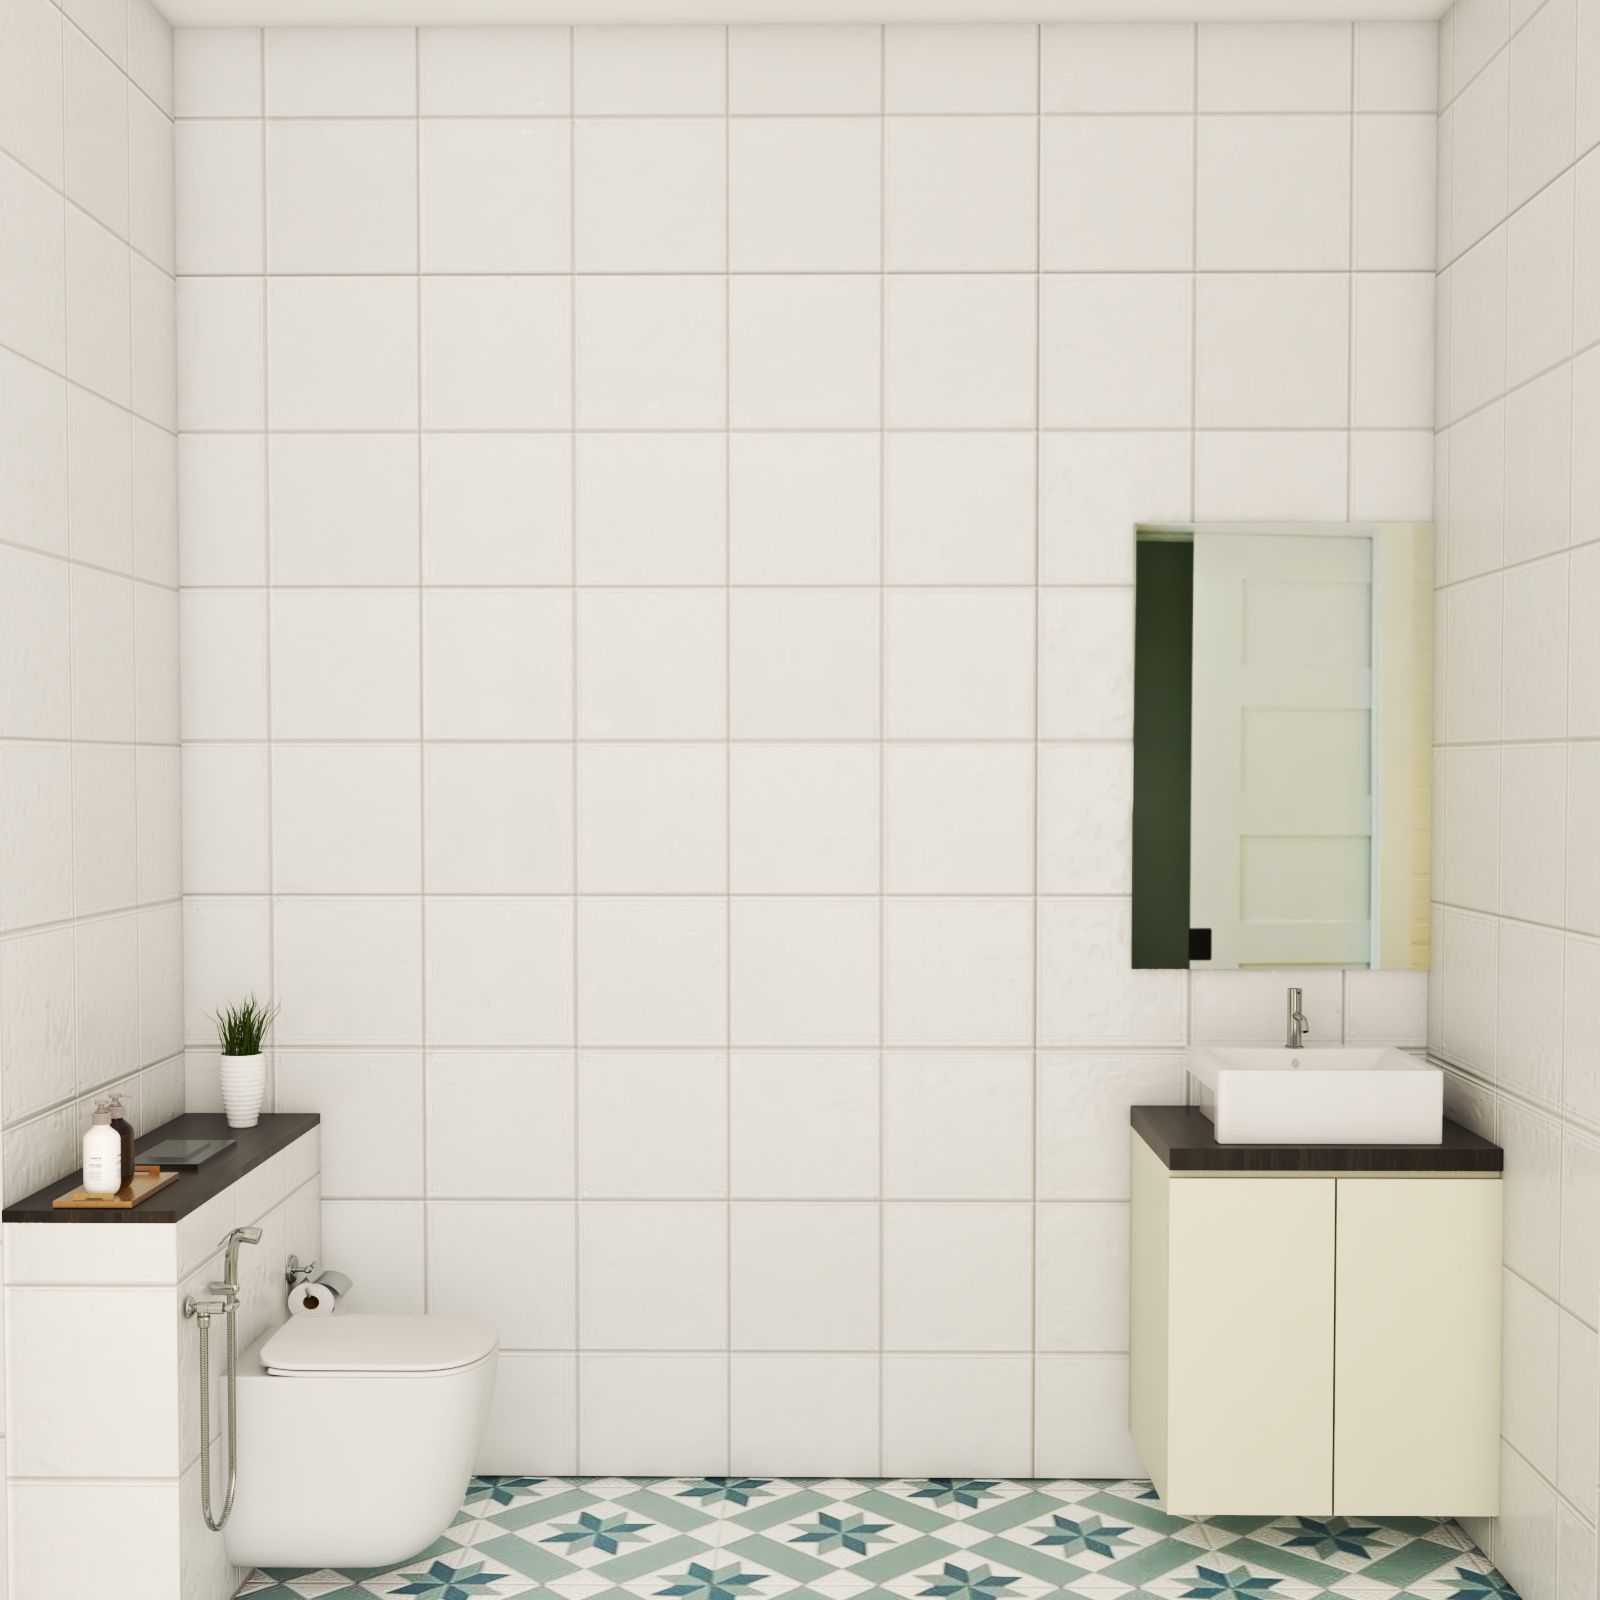 Contemporary Small Bathroom Design With White Ceramic Tiles